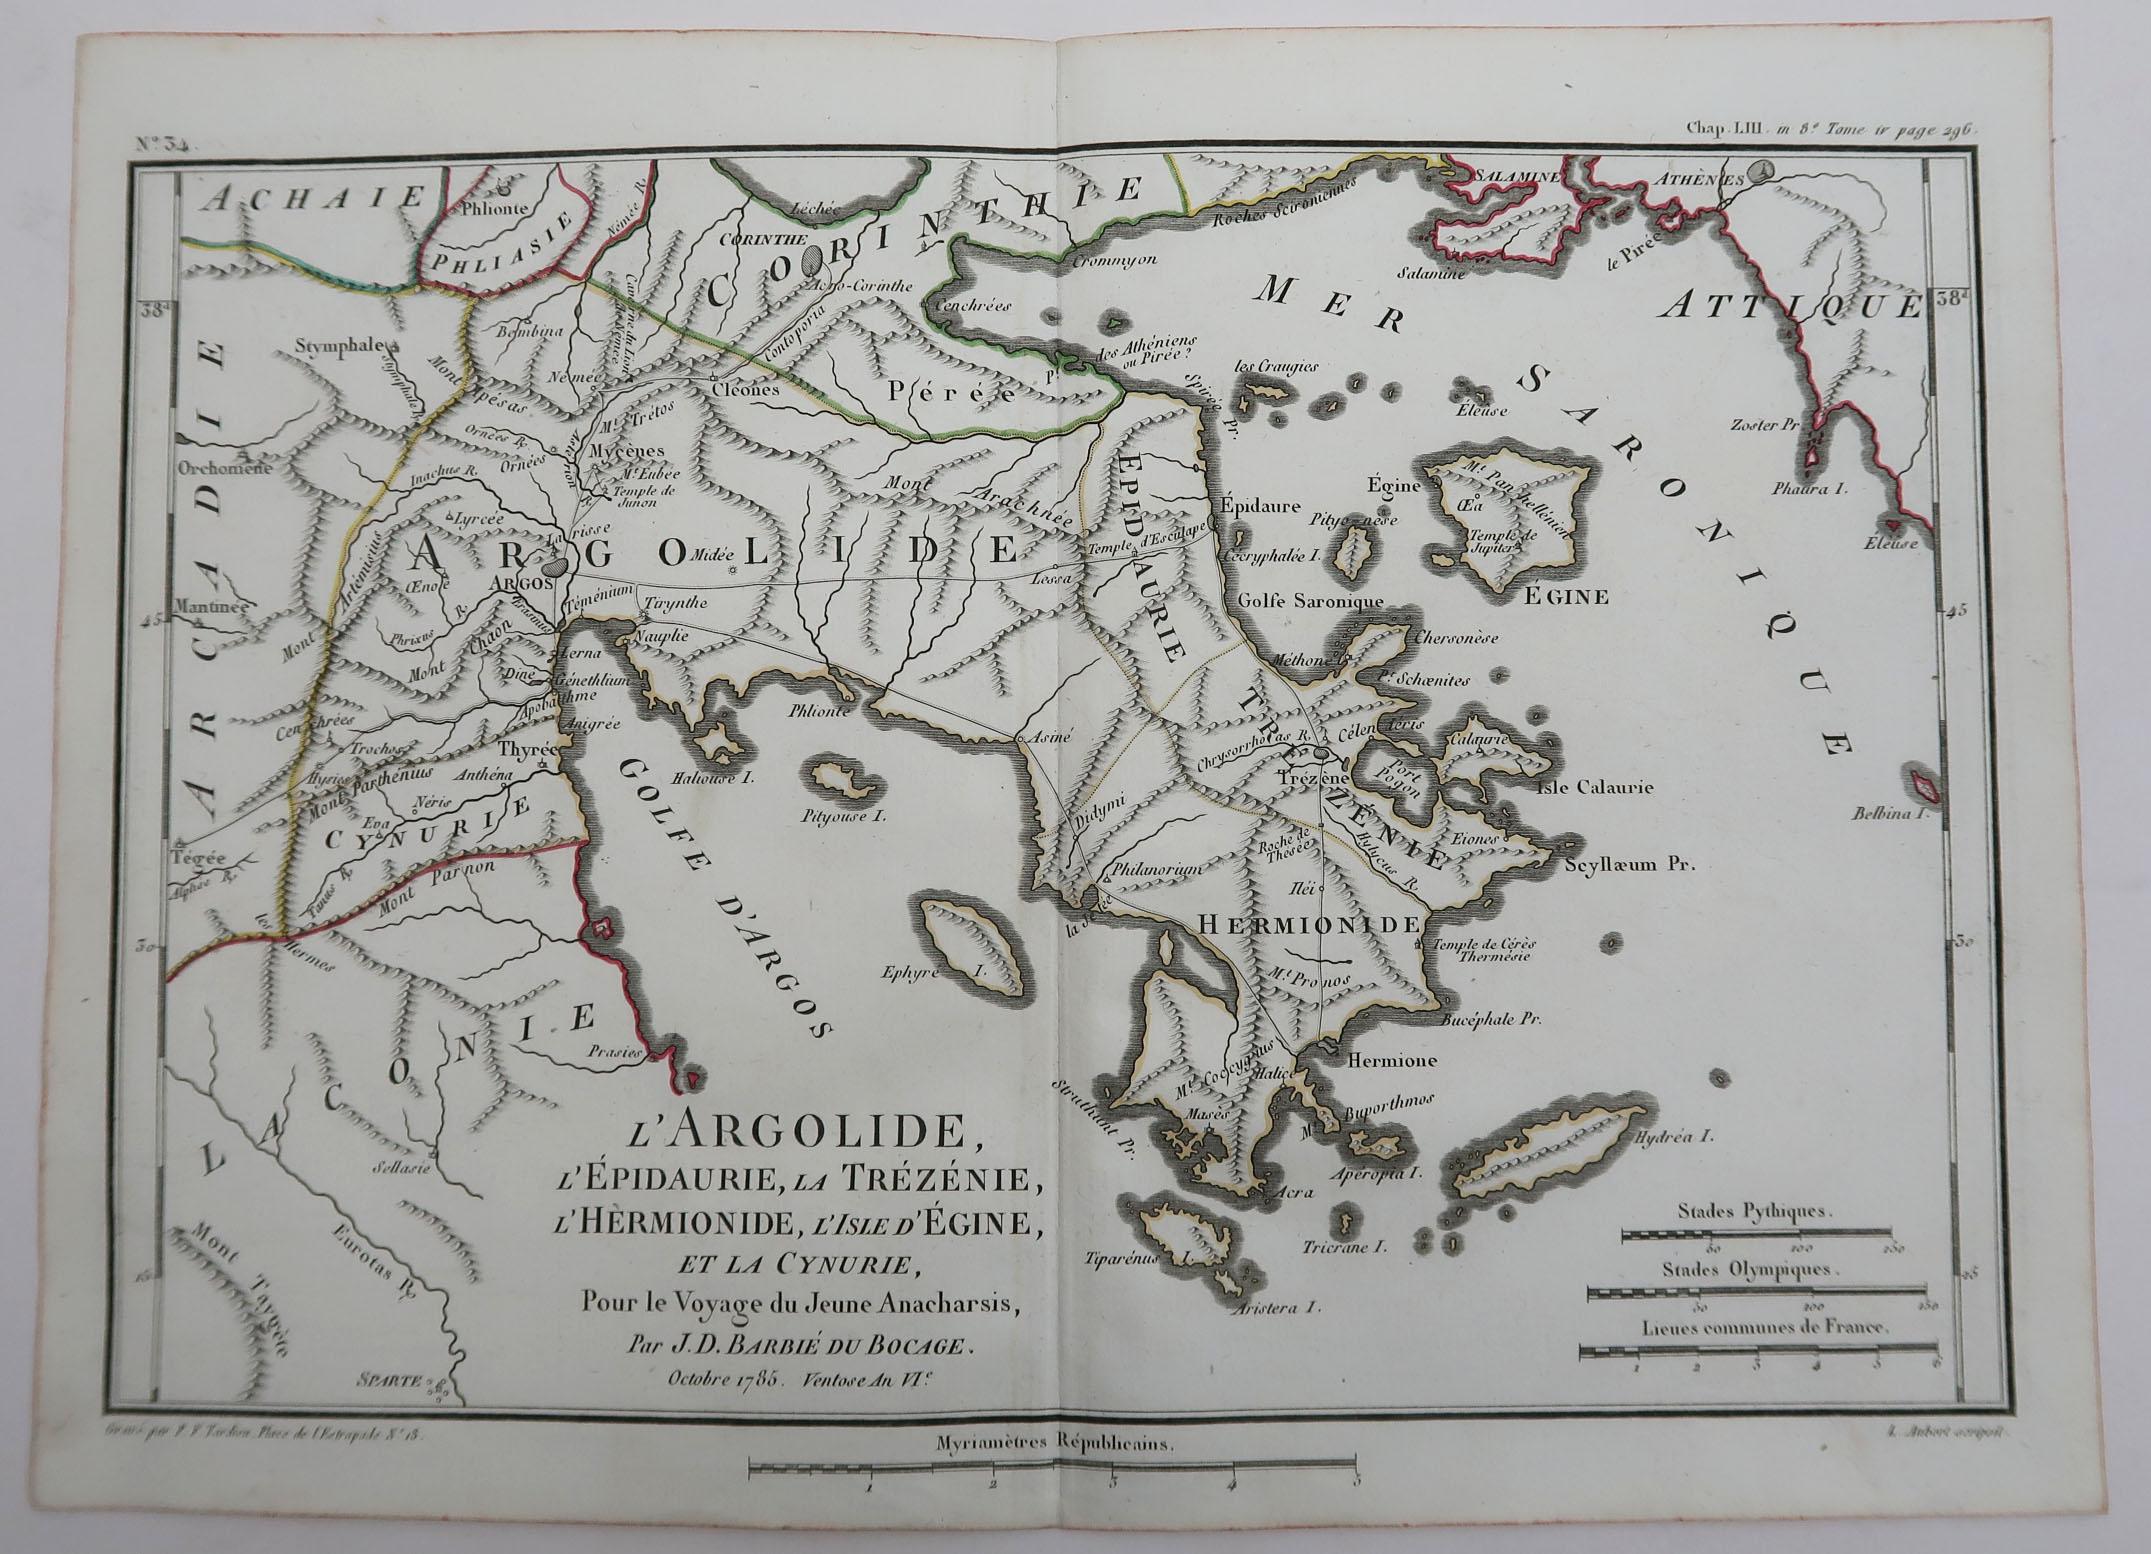 French Original Antique Map of Ancient Greece, Argolis, Island of Hydra, 1785